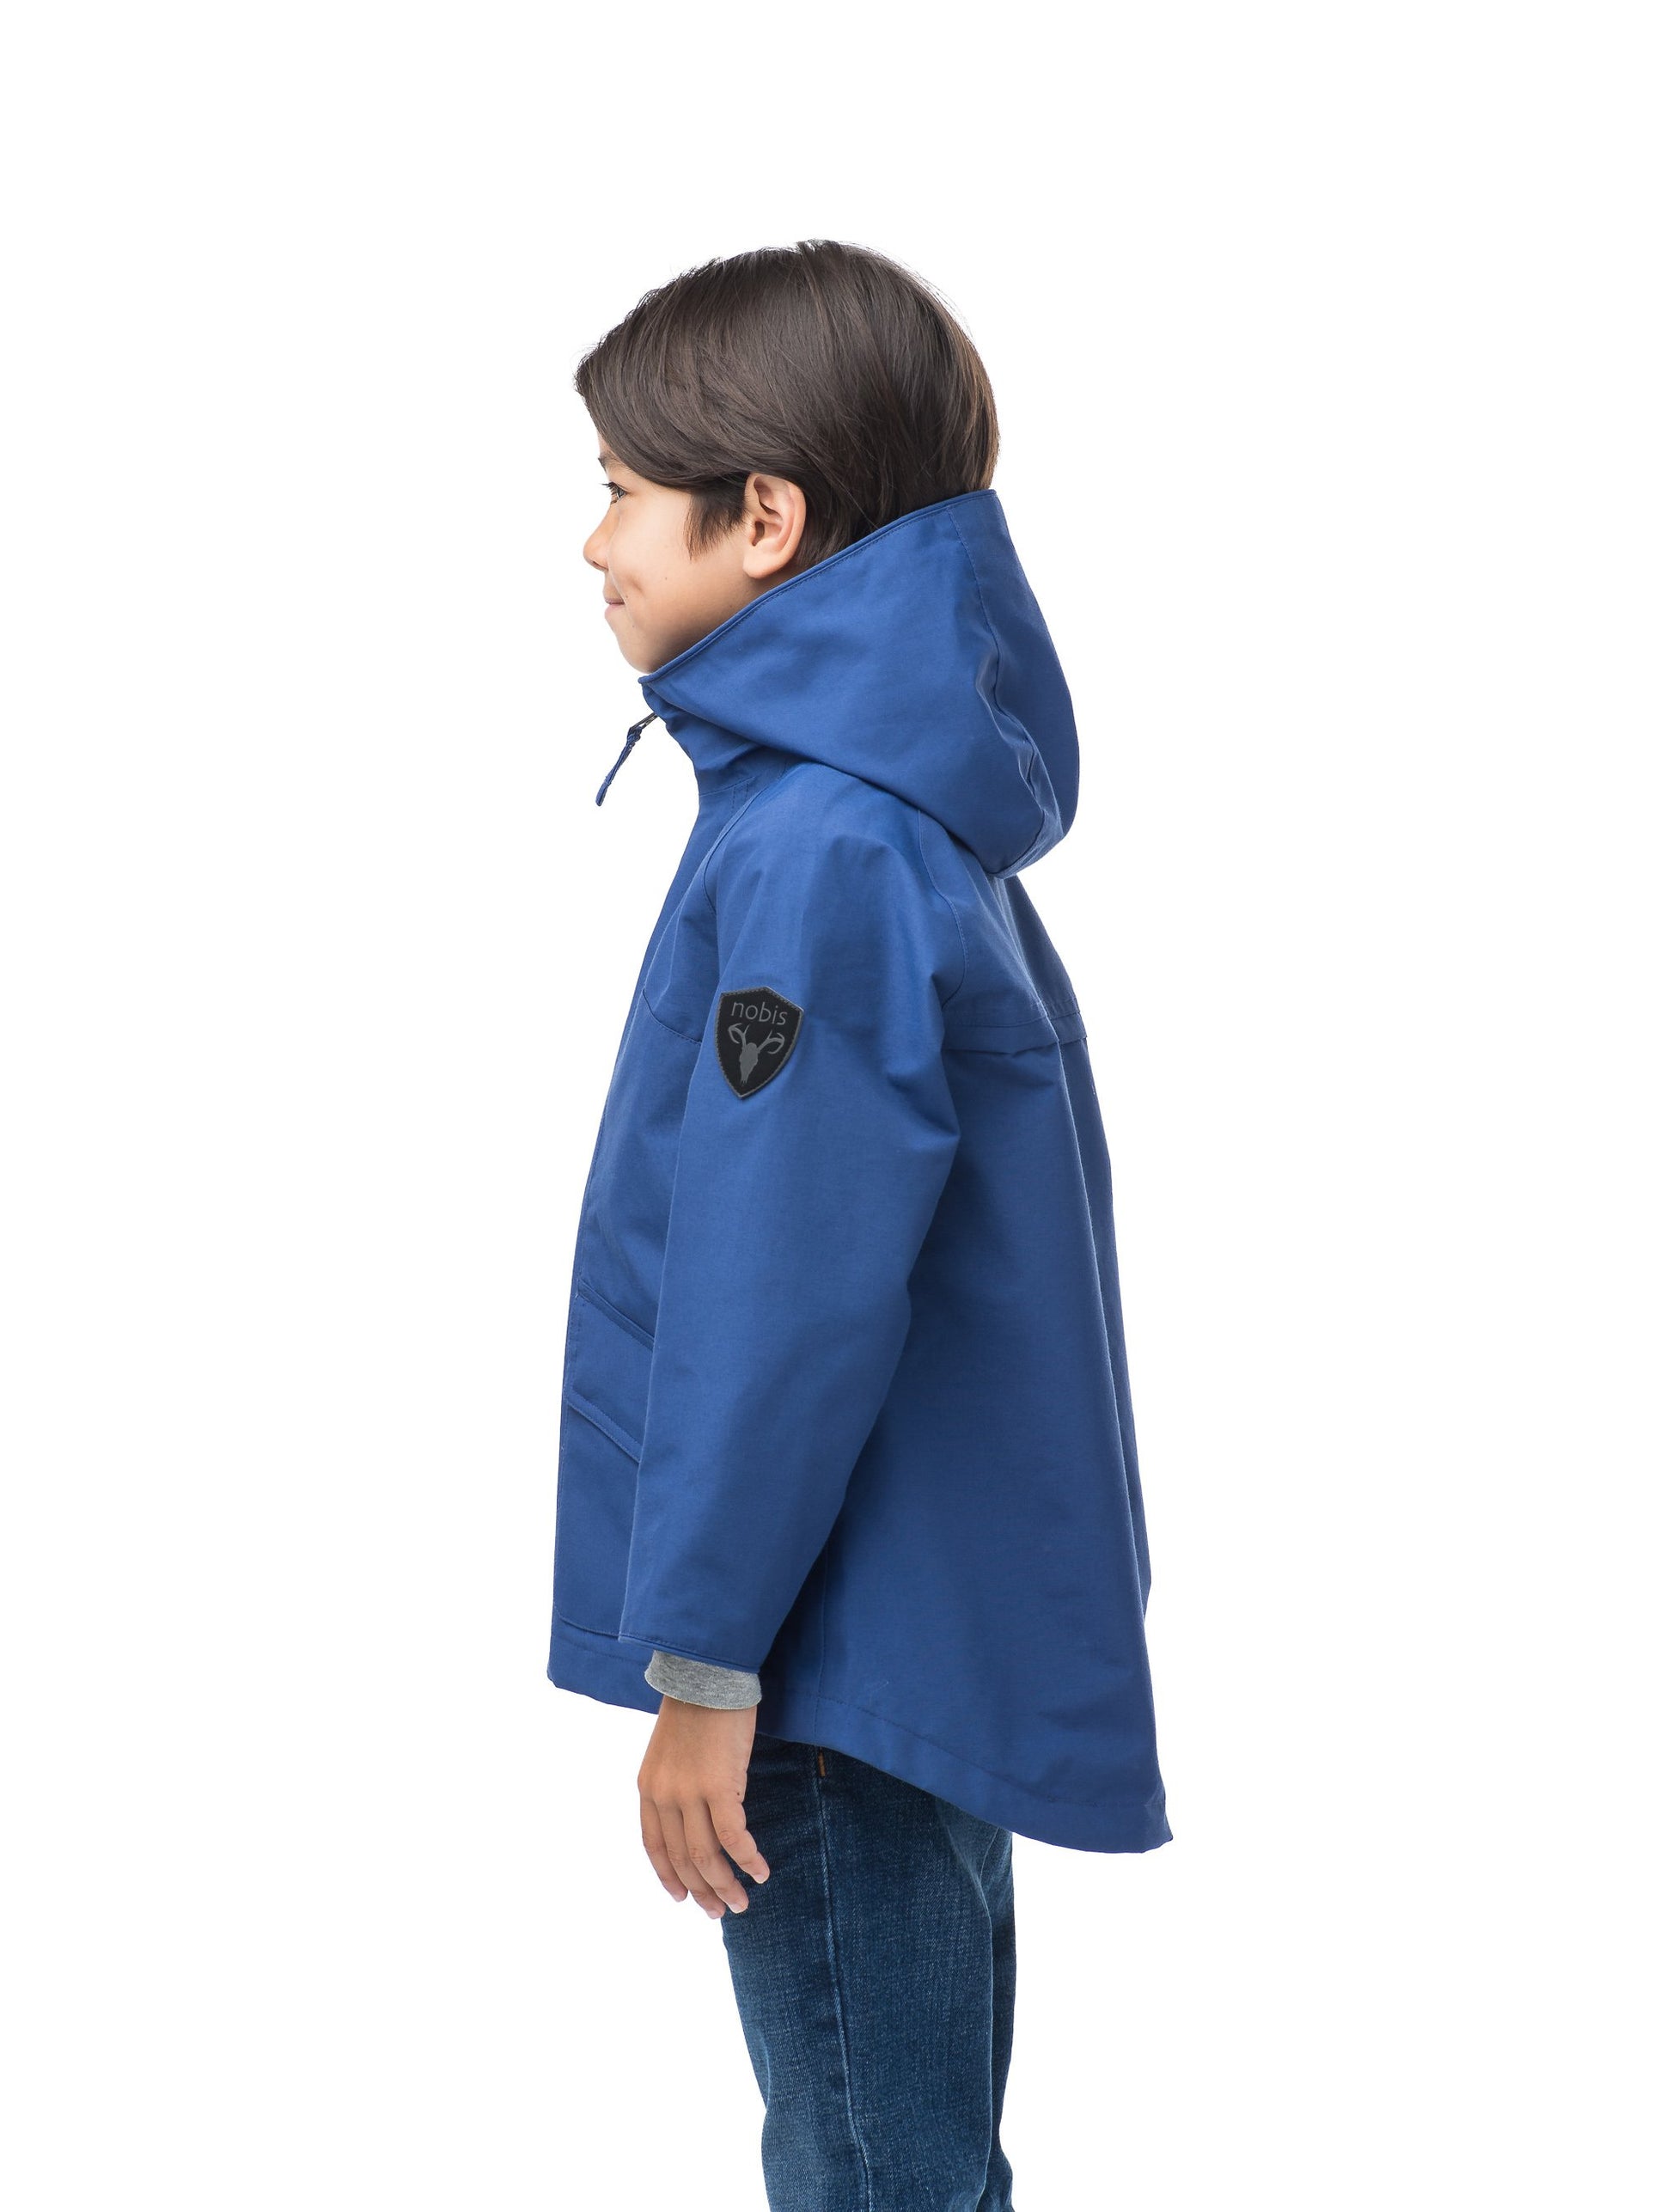 Kid's hip length fishtail rain jacket with hood in Royal